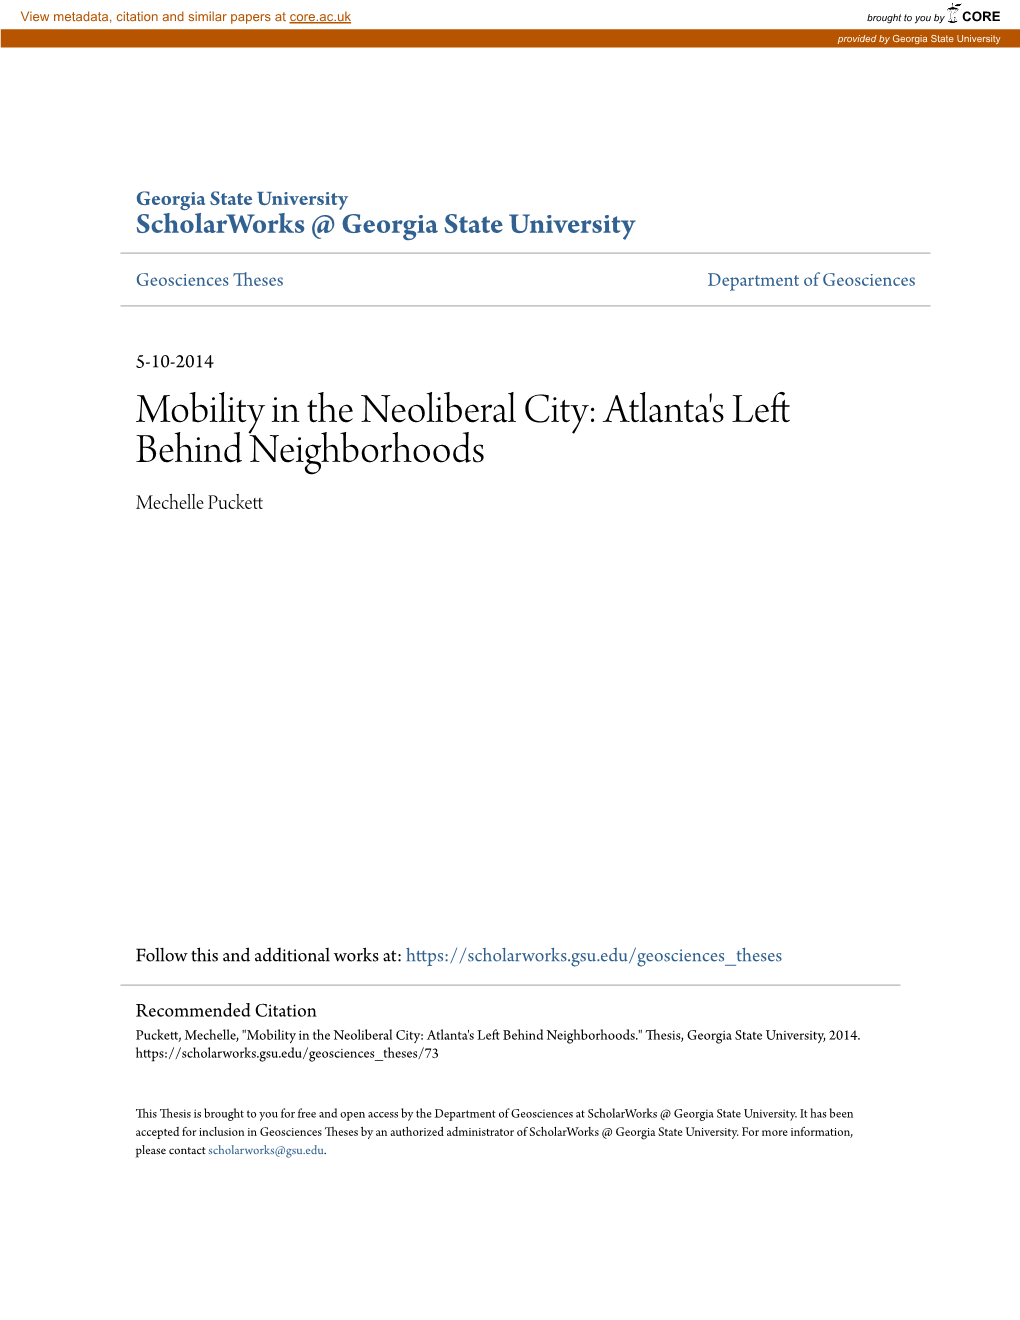 Mobility in the Neoliberal City: Atlanta's Left Behind Neighborhoods Mechelle Puckett